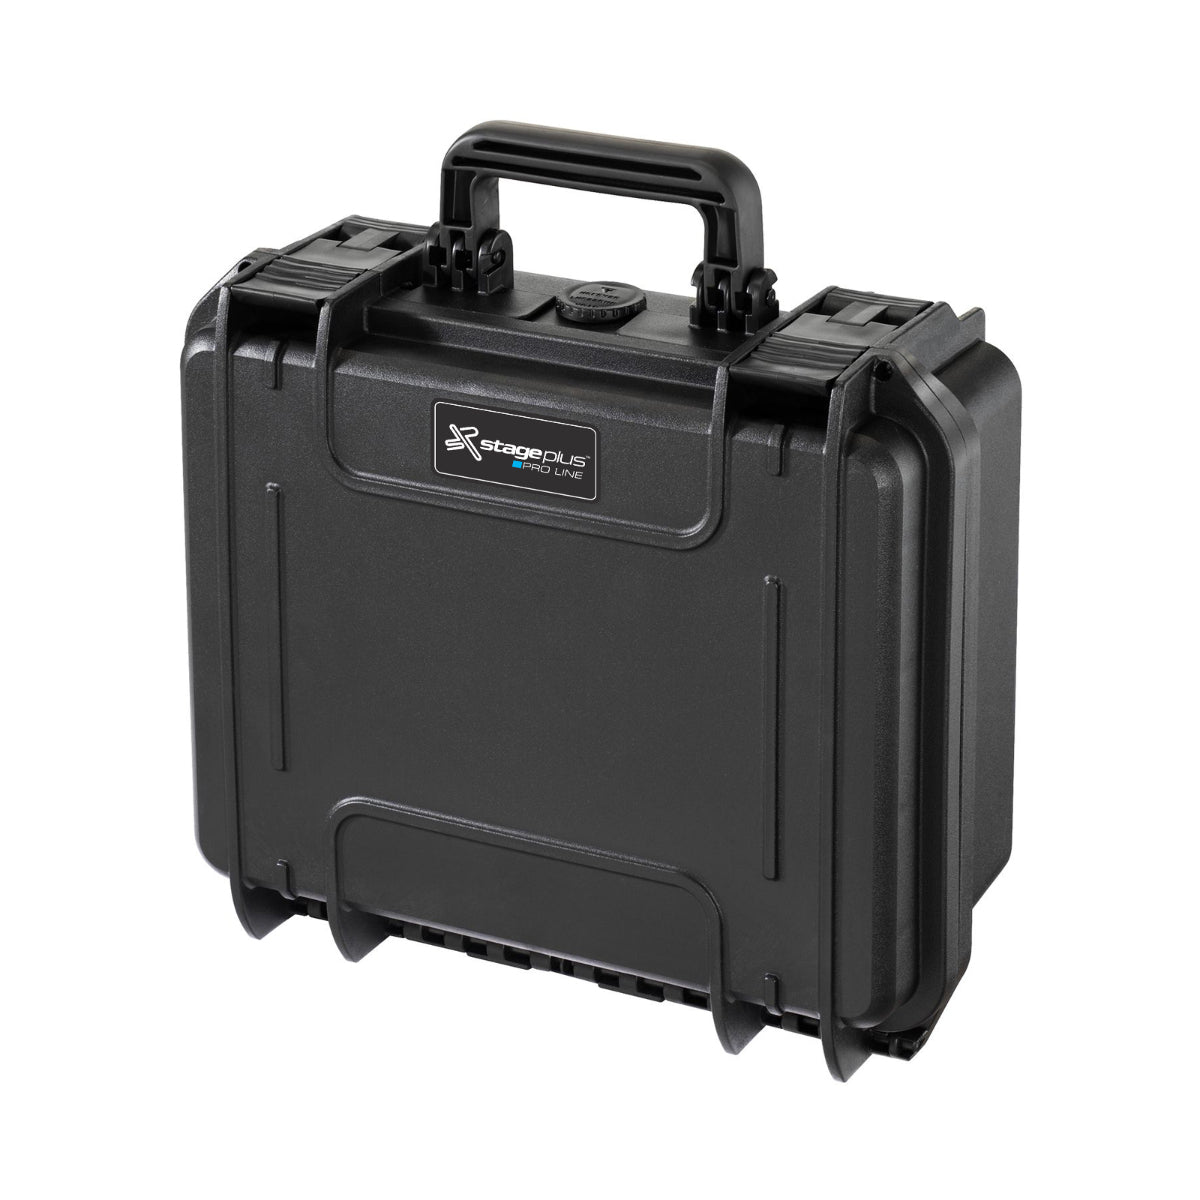 SP PRO 300S Black Carry Case, Cubed Foam, ID: L300xW225xH132mm